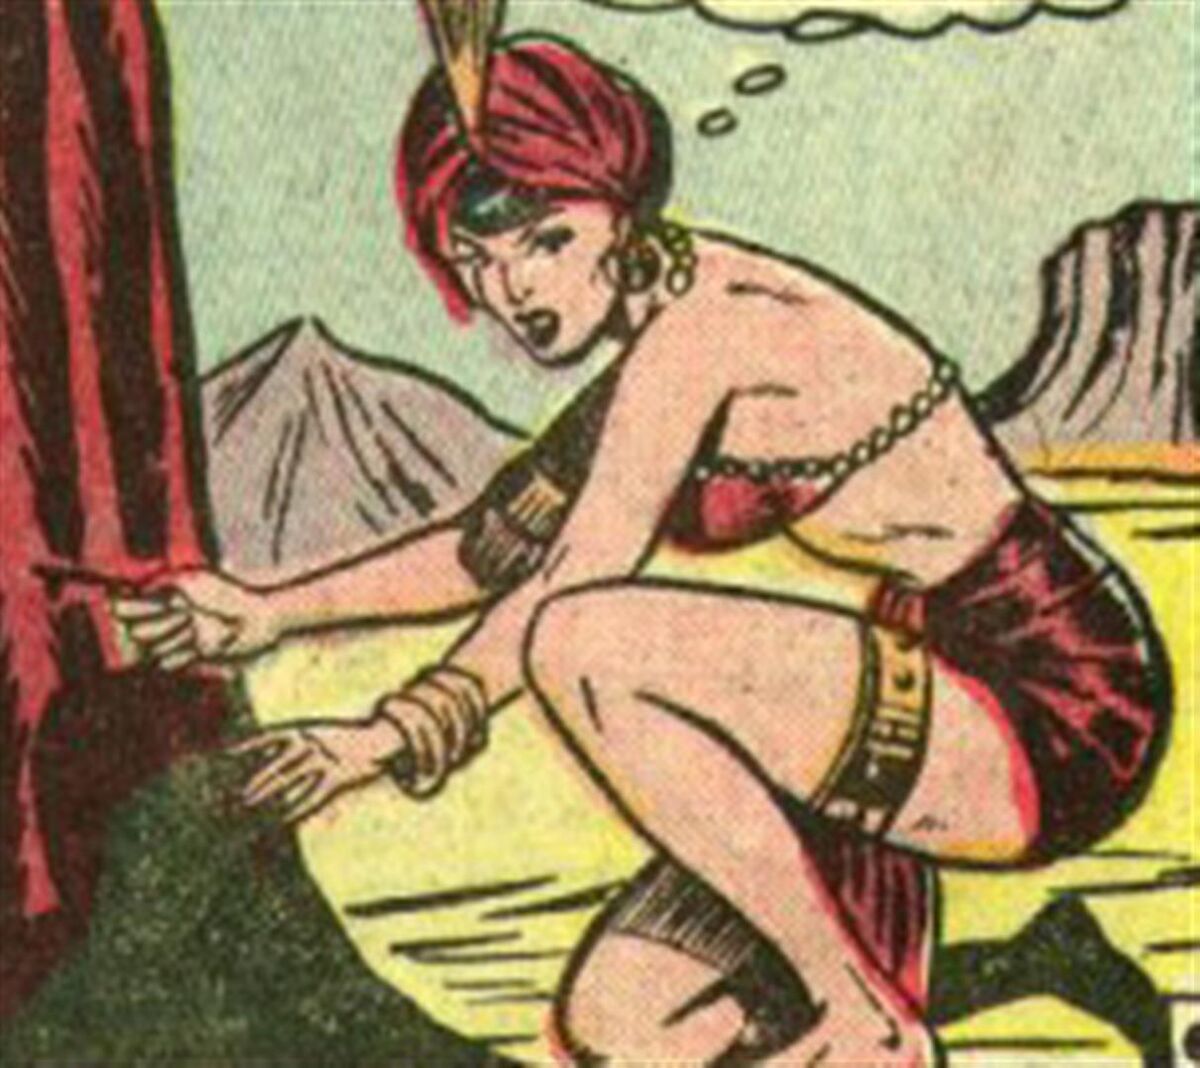 Whip Woman (Rulah, Jungle Goddess), The Female Villains Wiki